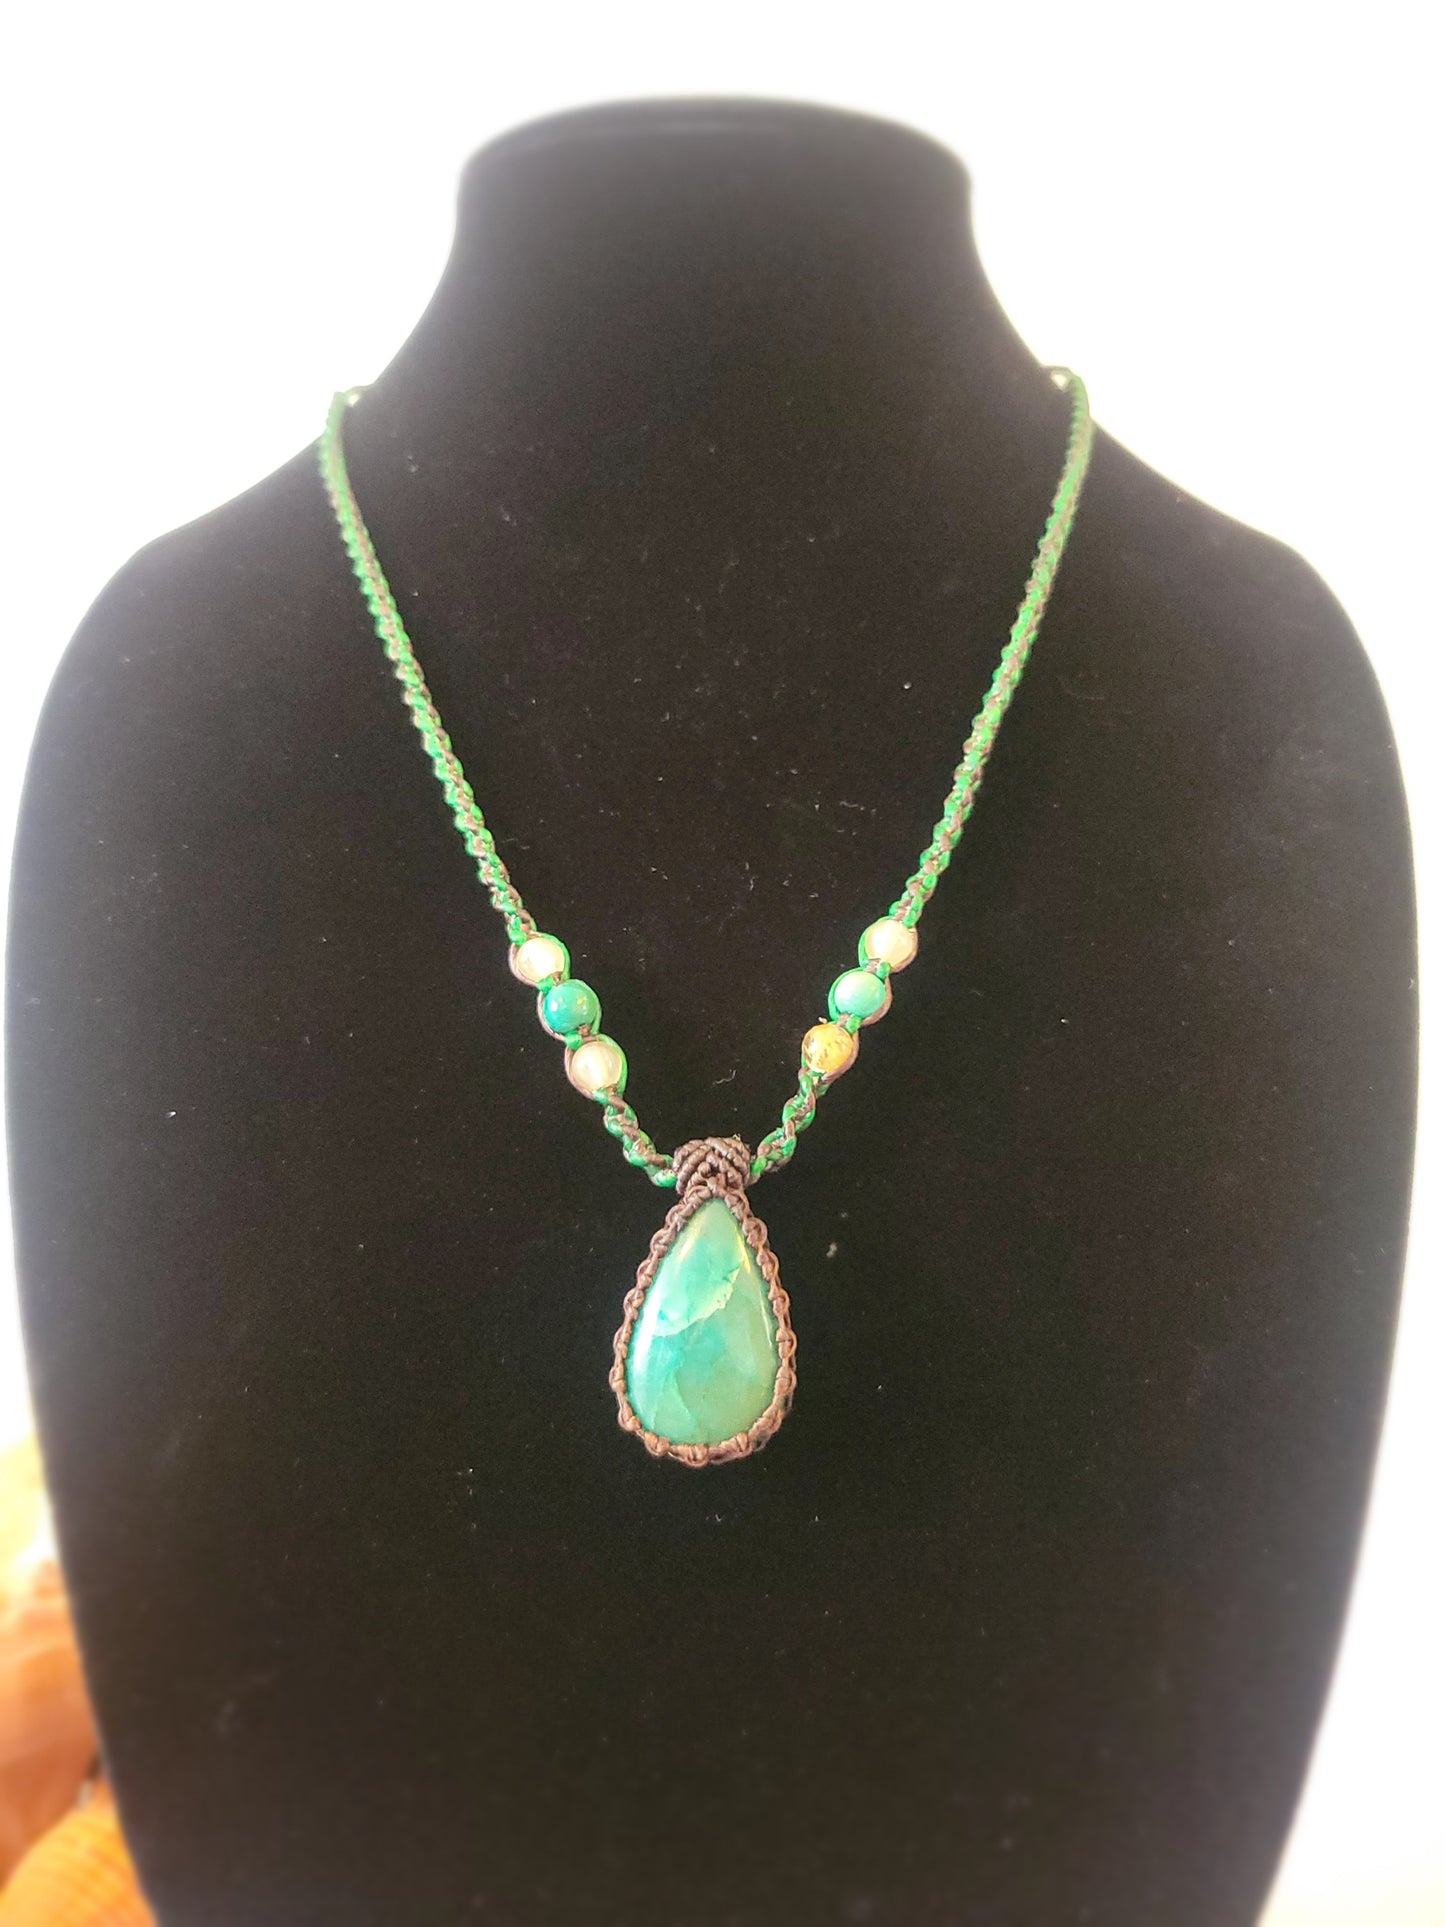 Elegant Green Chrysocolla Stone Pendant - Micromacrame Artistry with Quartz Beads